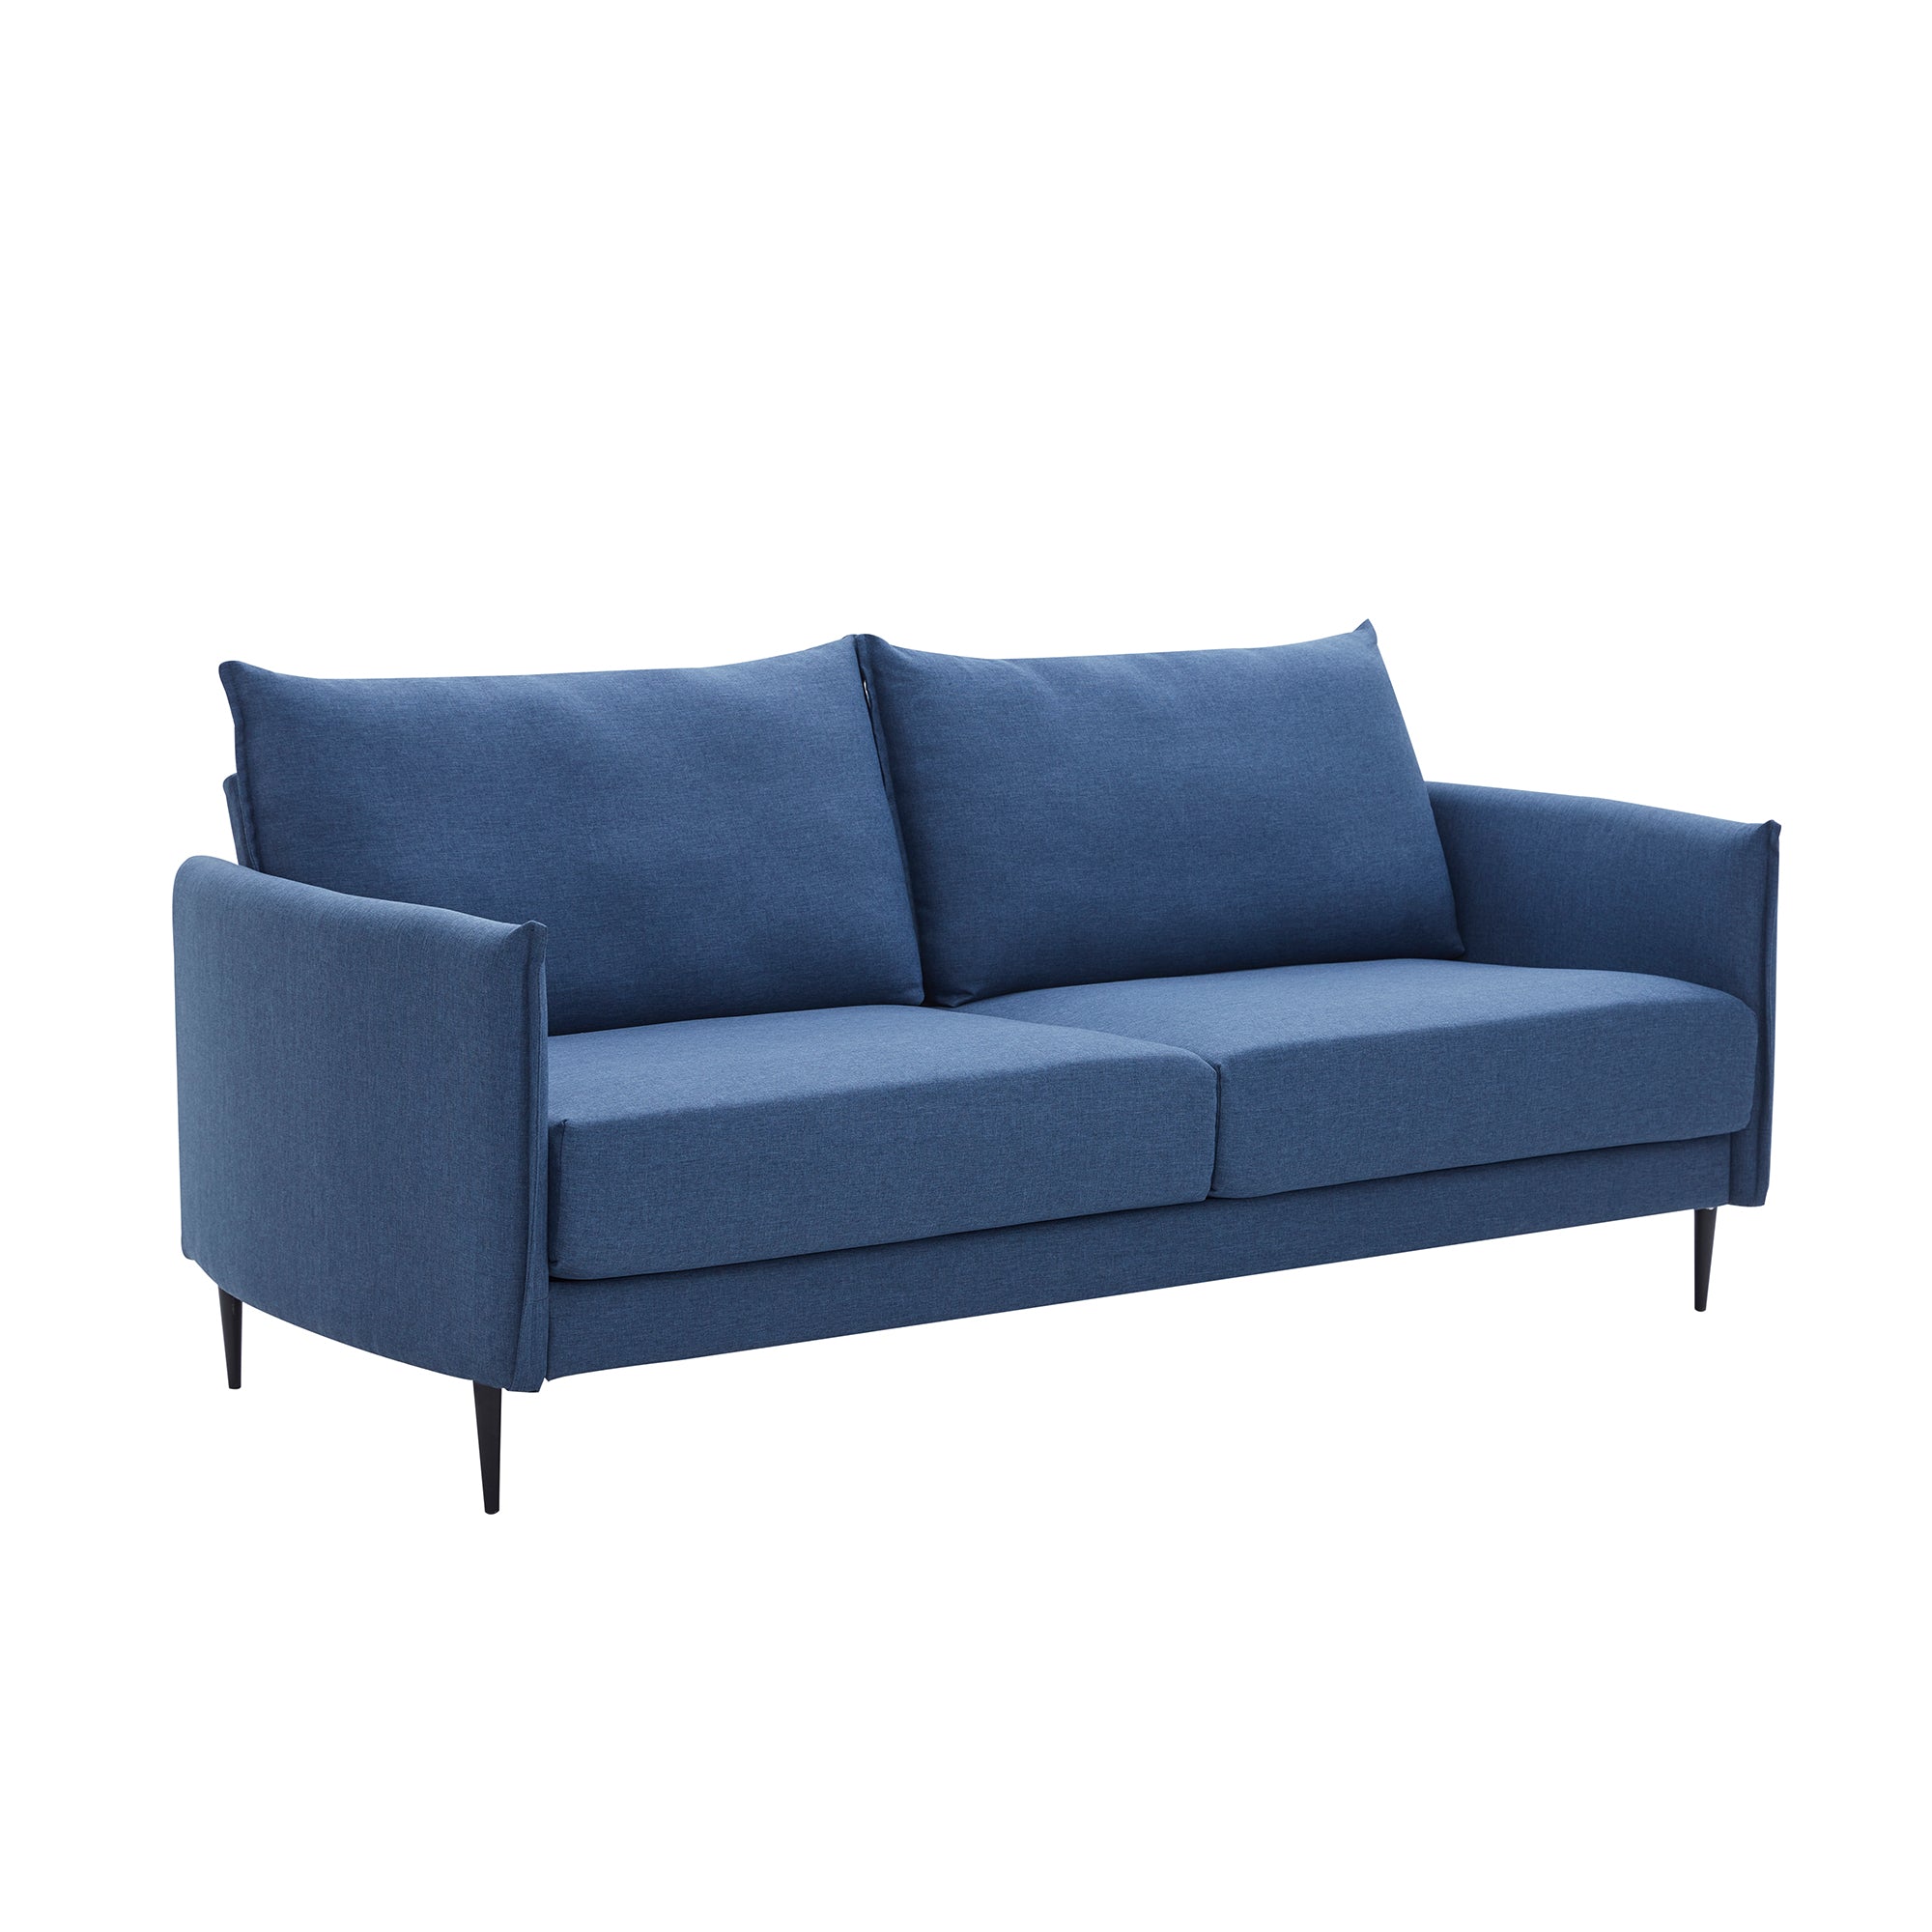 65.8" Modern Design Couch Soft Linen Upholstery Love-seat-Boyel Living